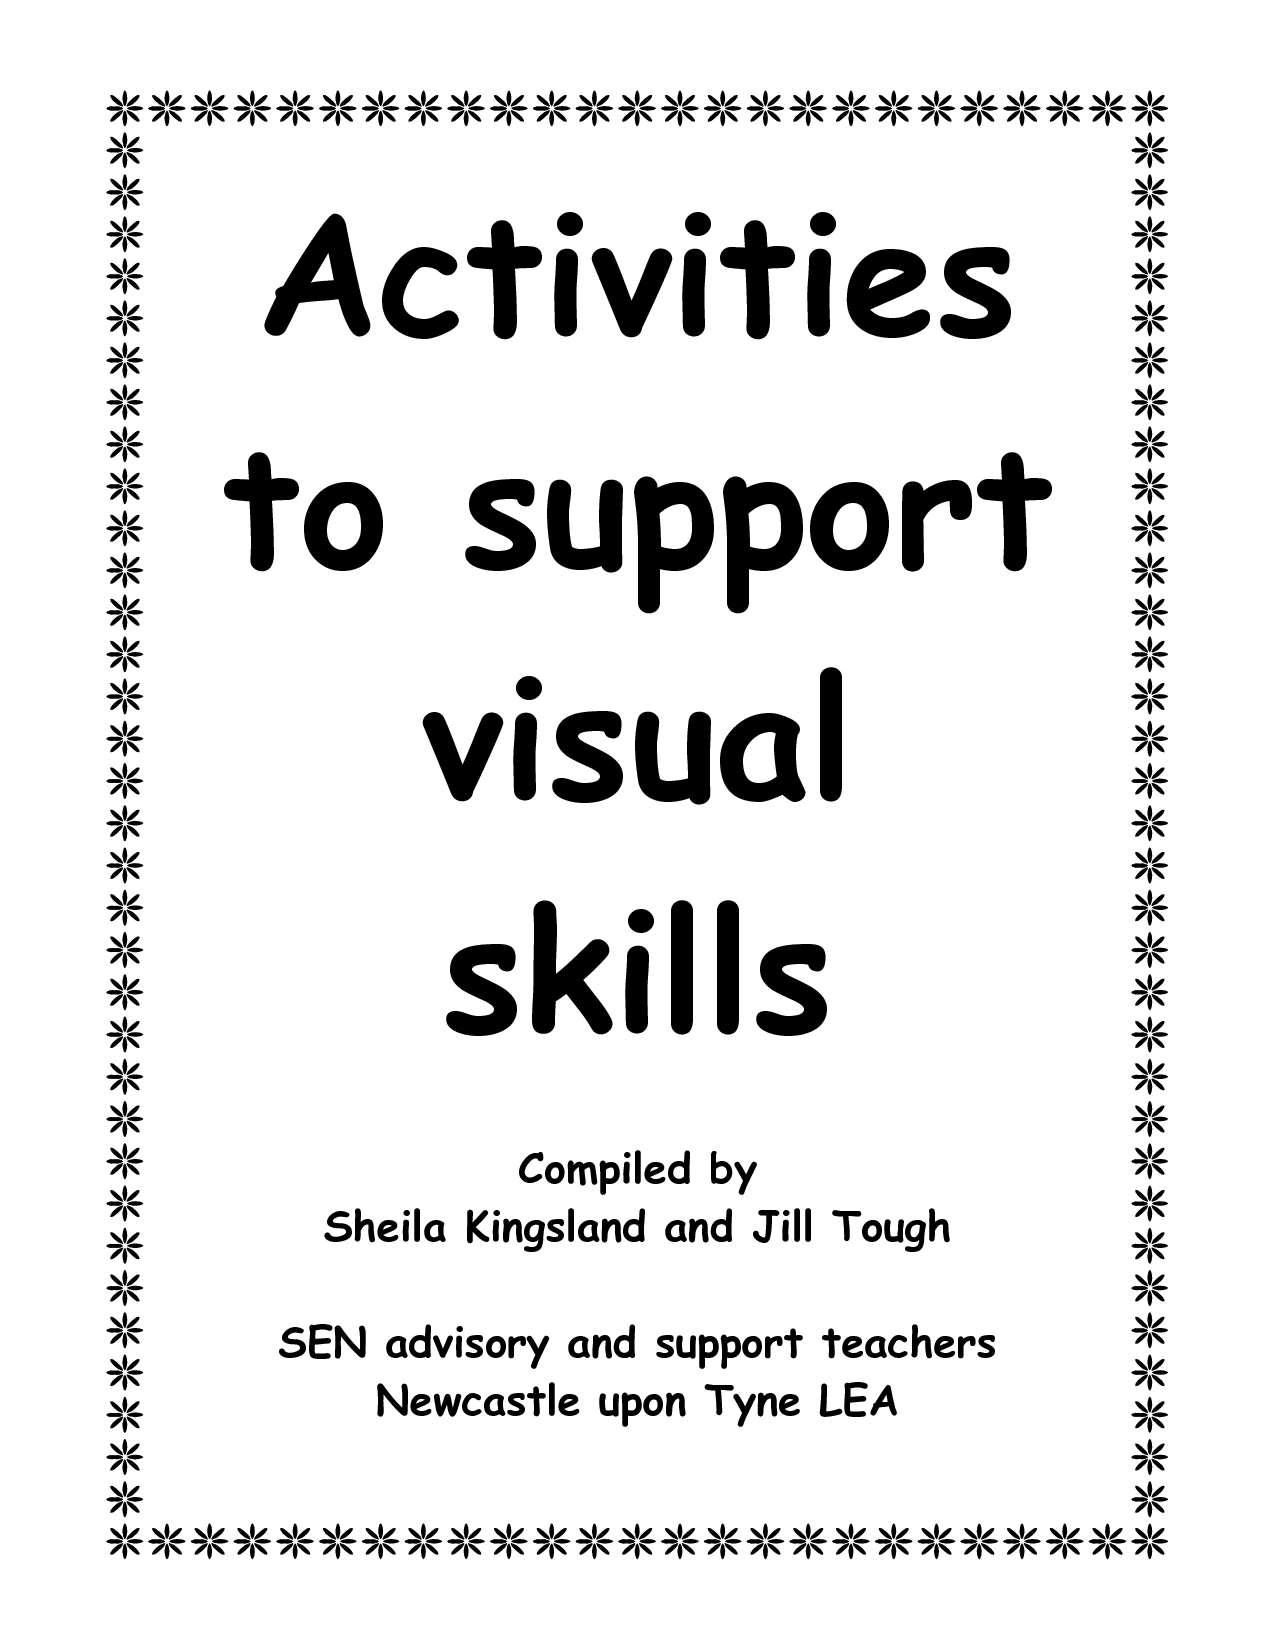 Visual Memory Activities Worksheets Image